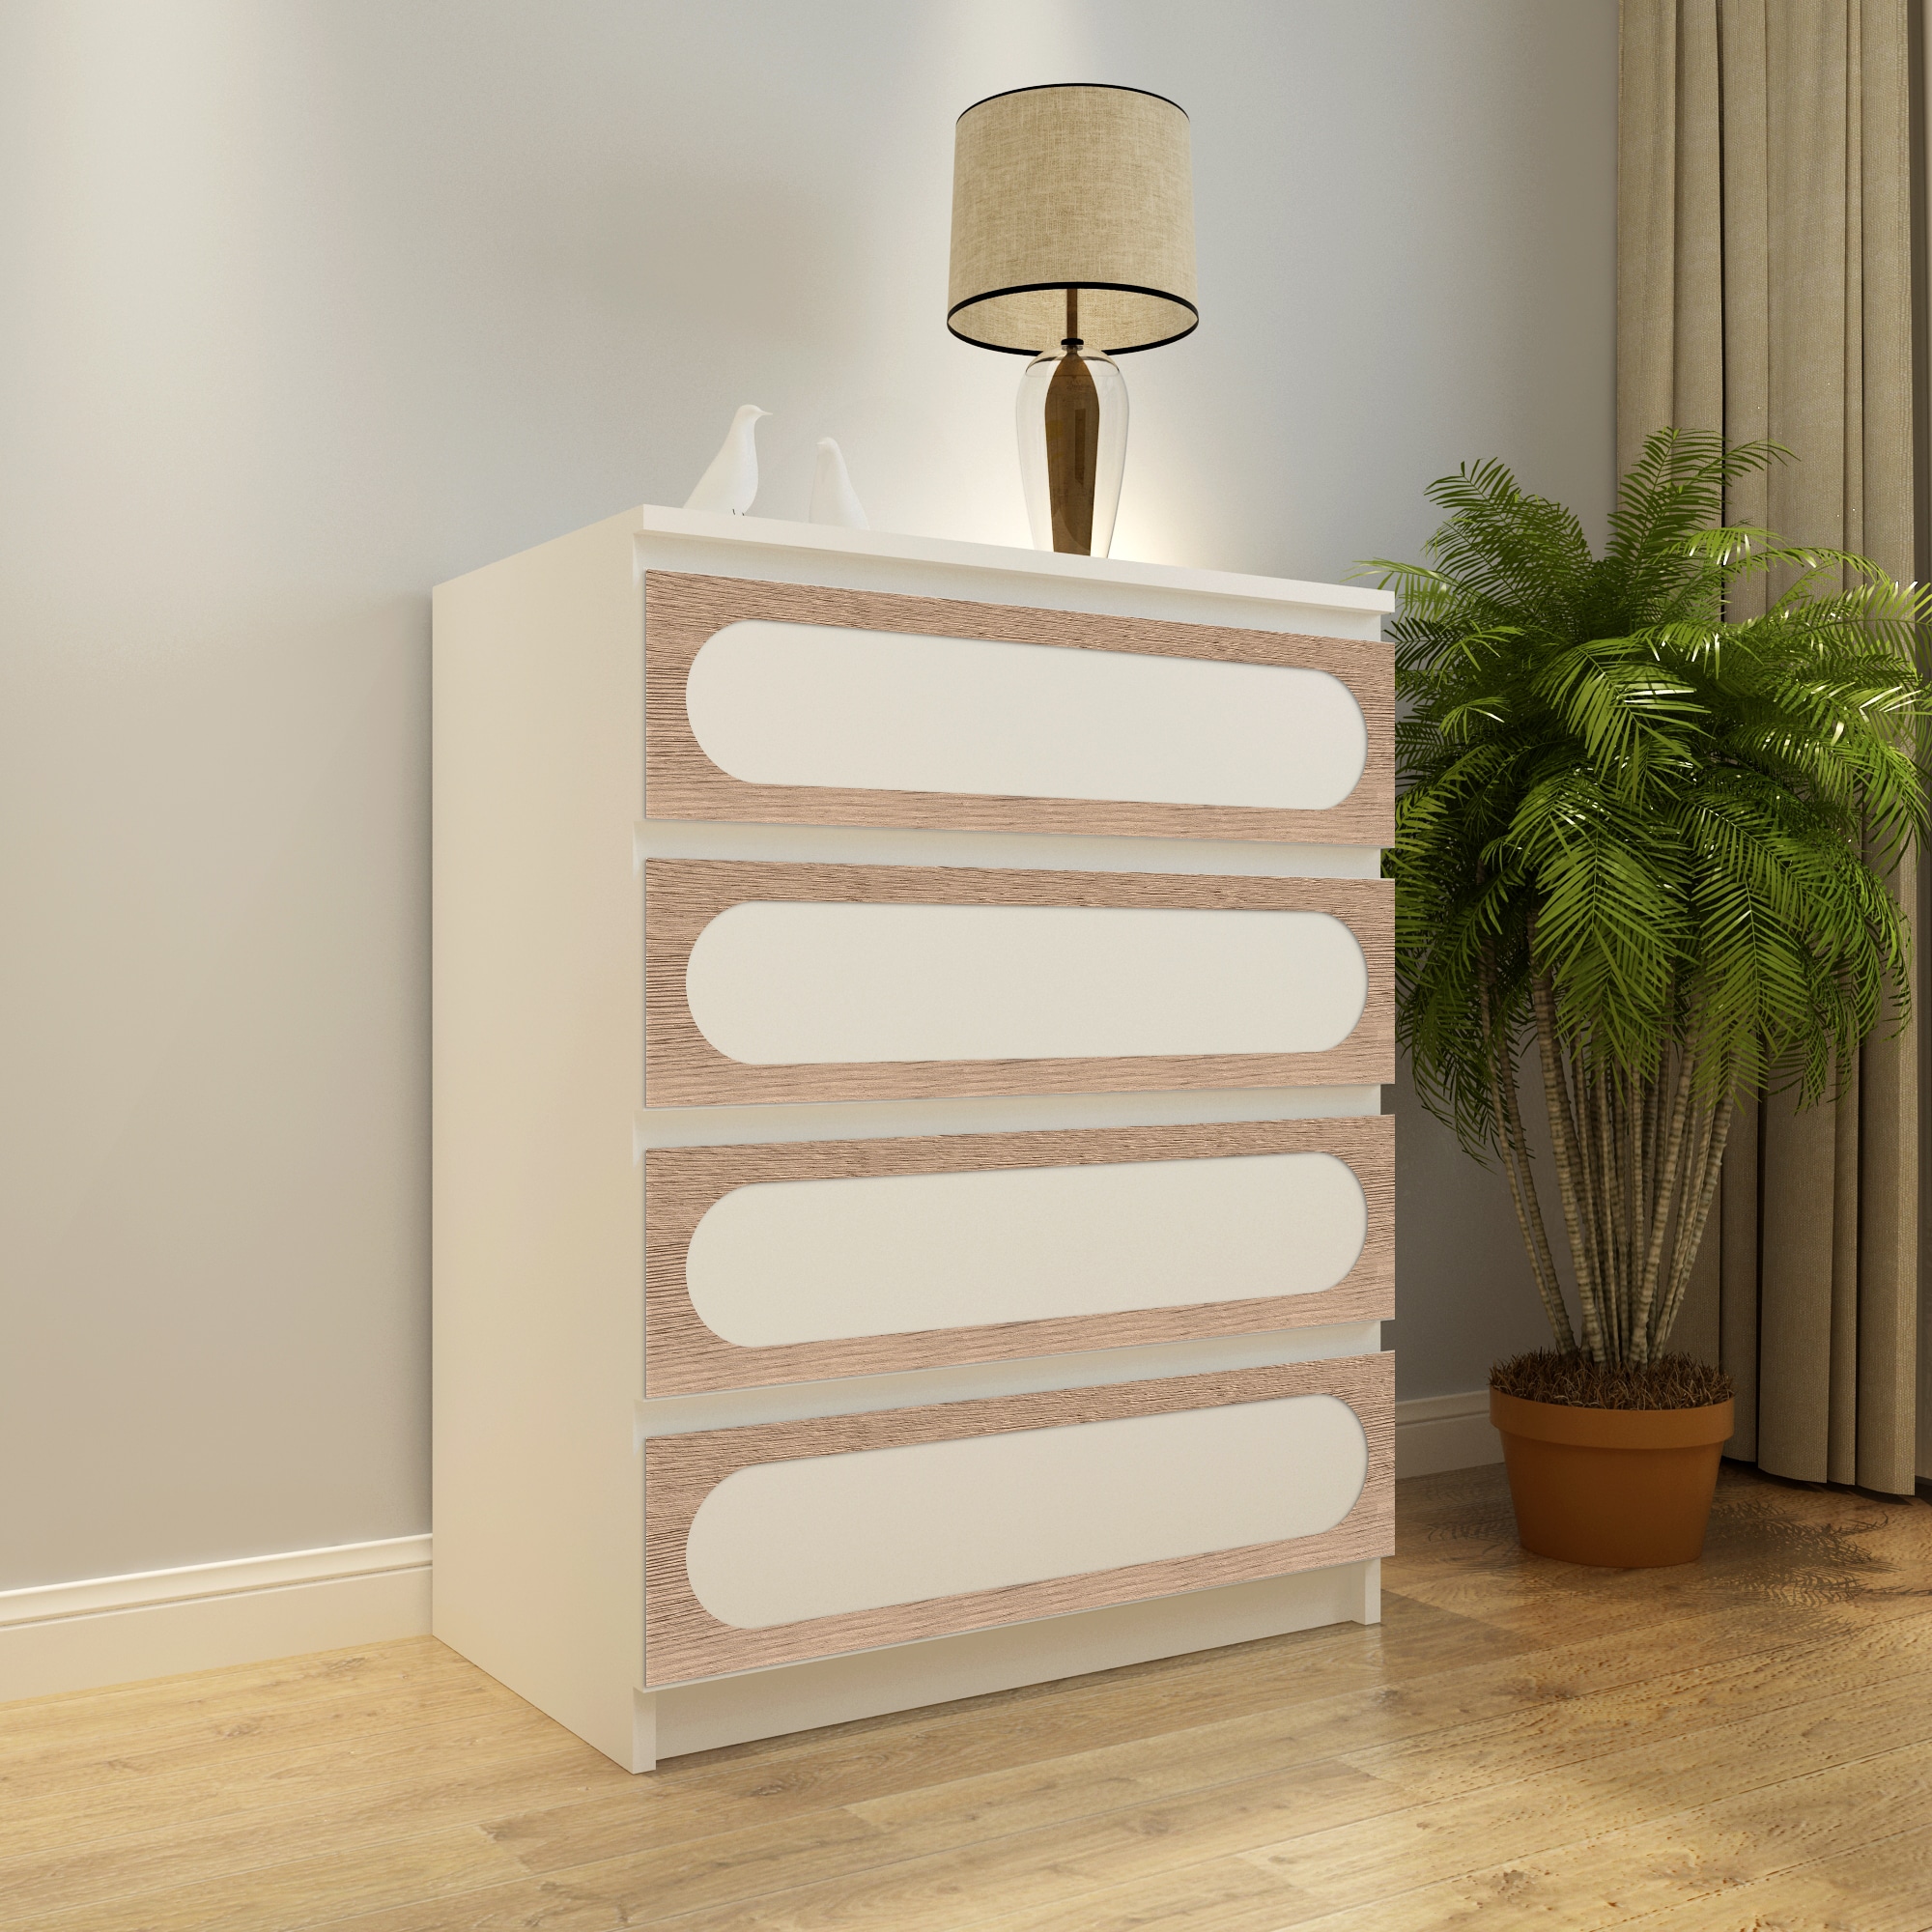 SCALLOP EDGE, MALM Kit, IKEA® Furniture Decor Overlay Panels - Drawe